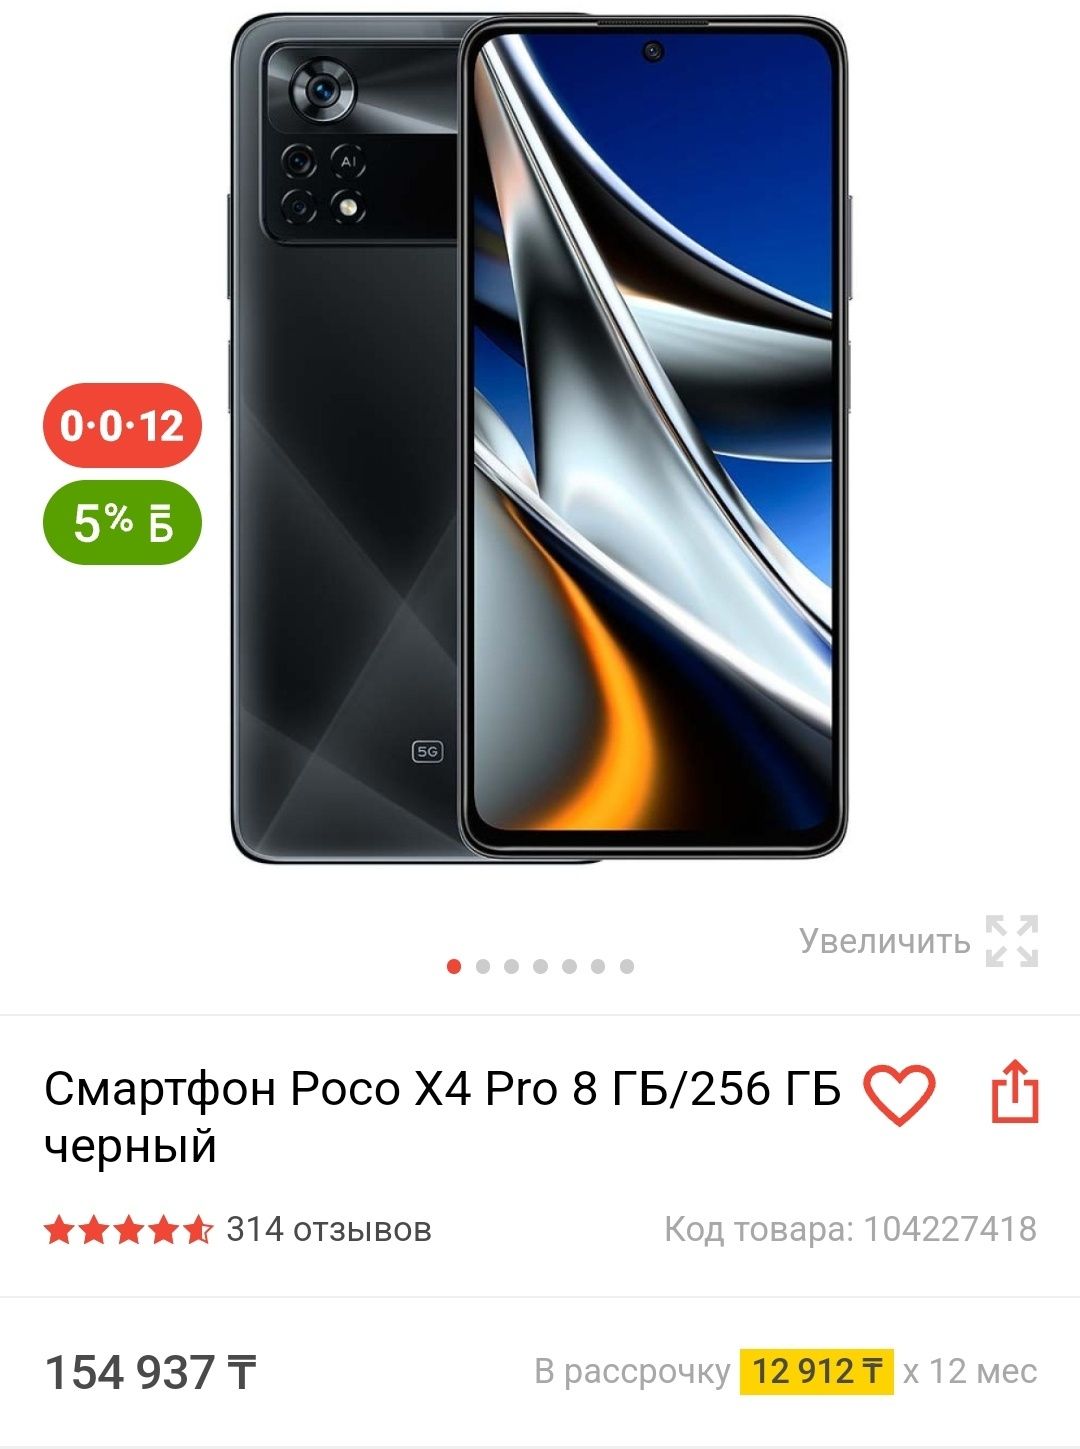 Продам poco x4 pro 8/256 гб в идеале либо обмен на Iphone